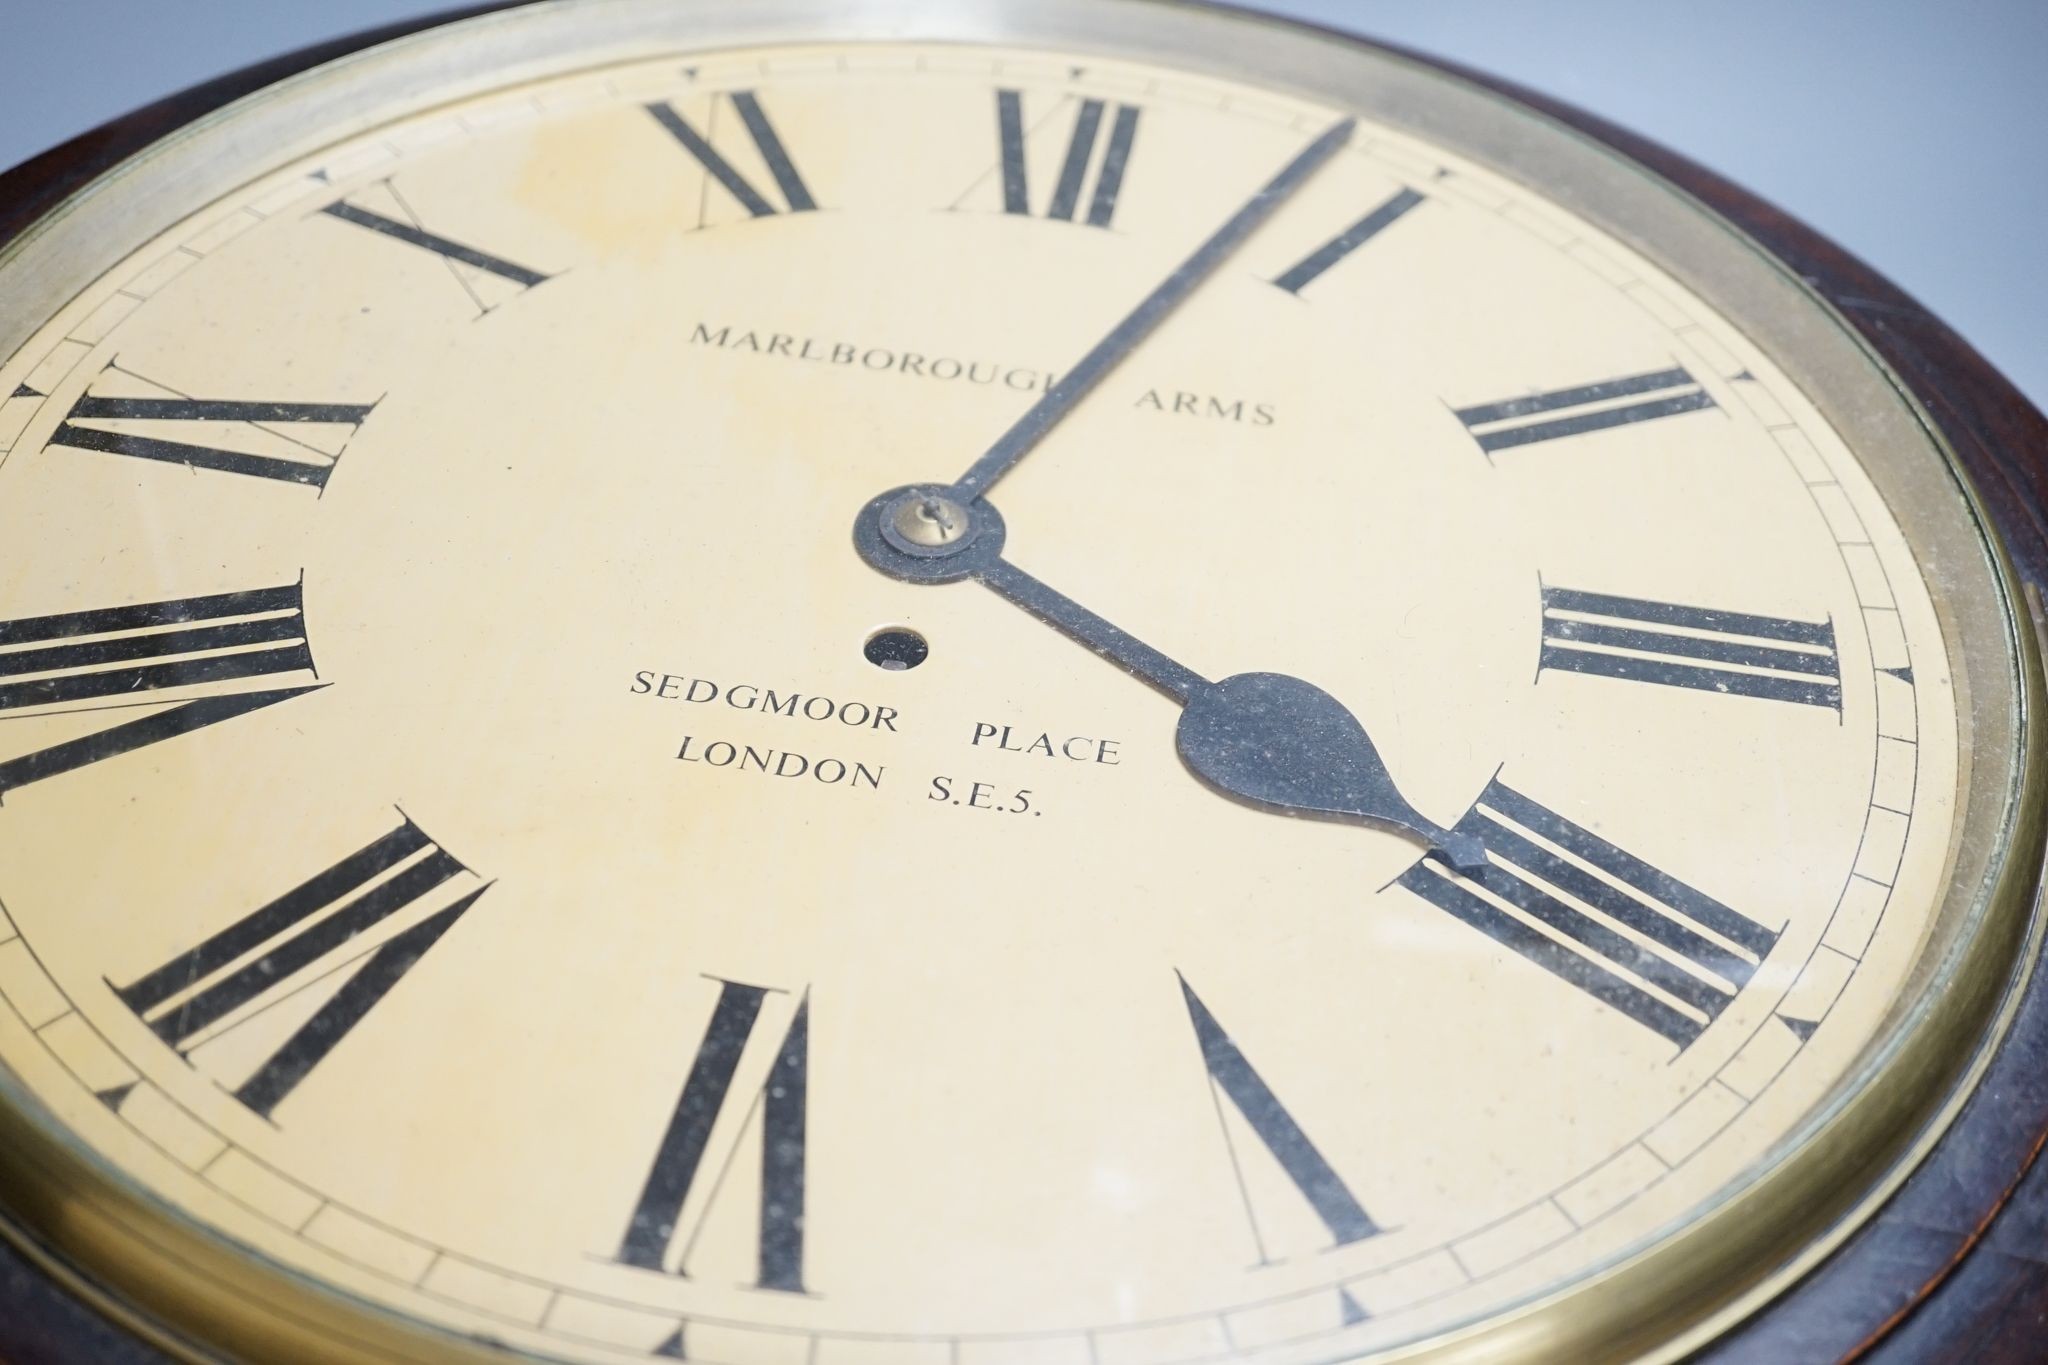 A mahogany dial clock, Marlborough Arms, Sedgmoor Place, London SE5., 48 cms diameter.